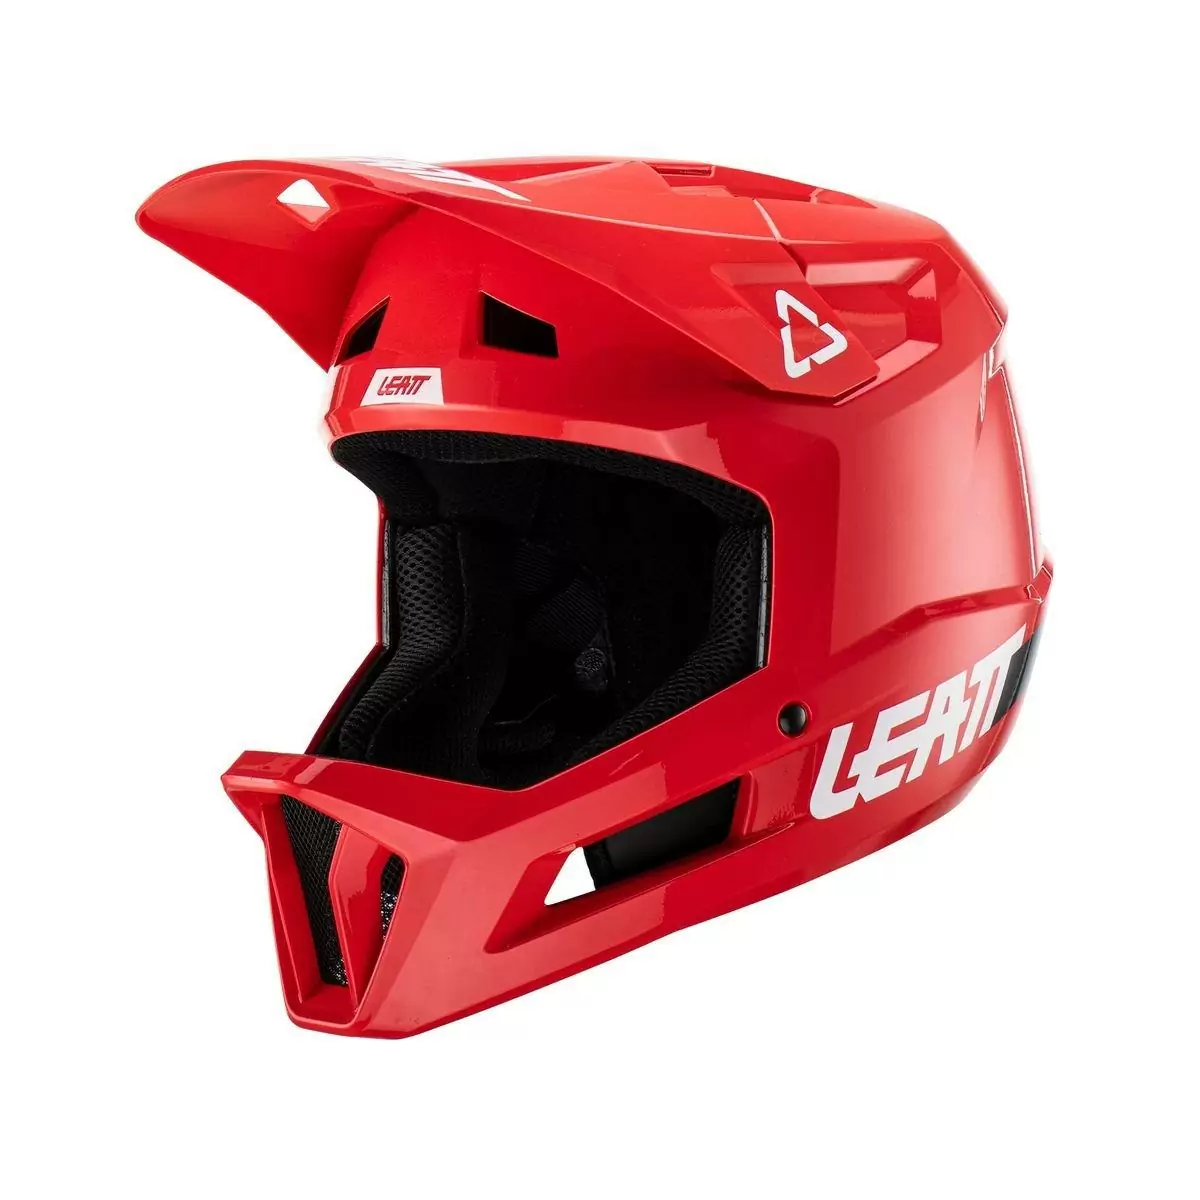 Gravity 1.0 Kids MTB Fullface Helmet Red Size XS (53-54cm) - image